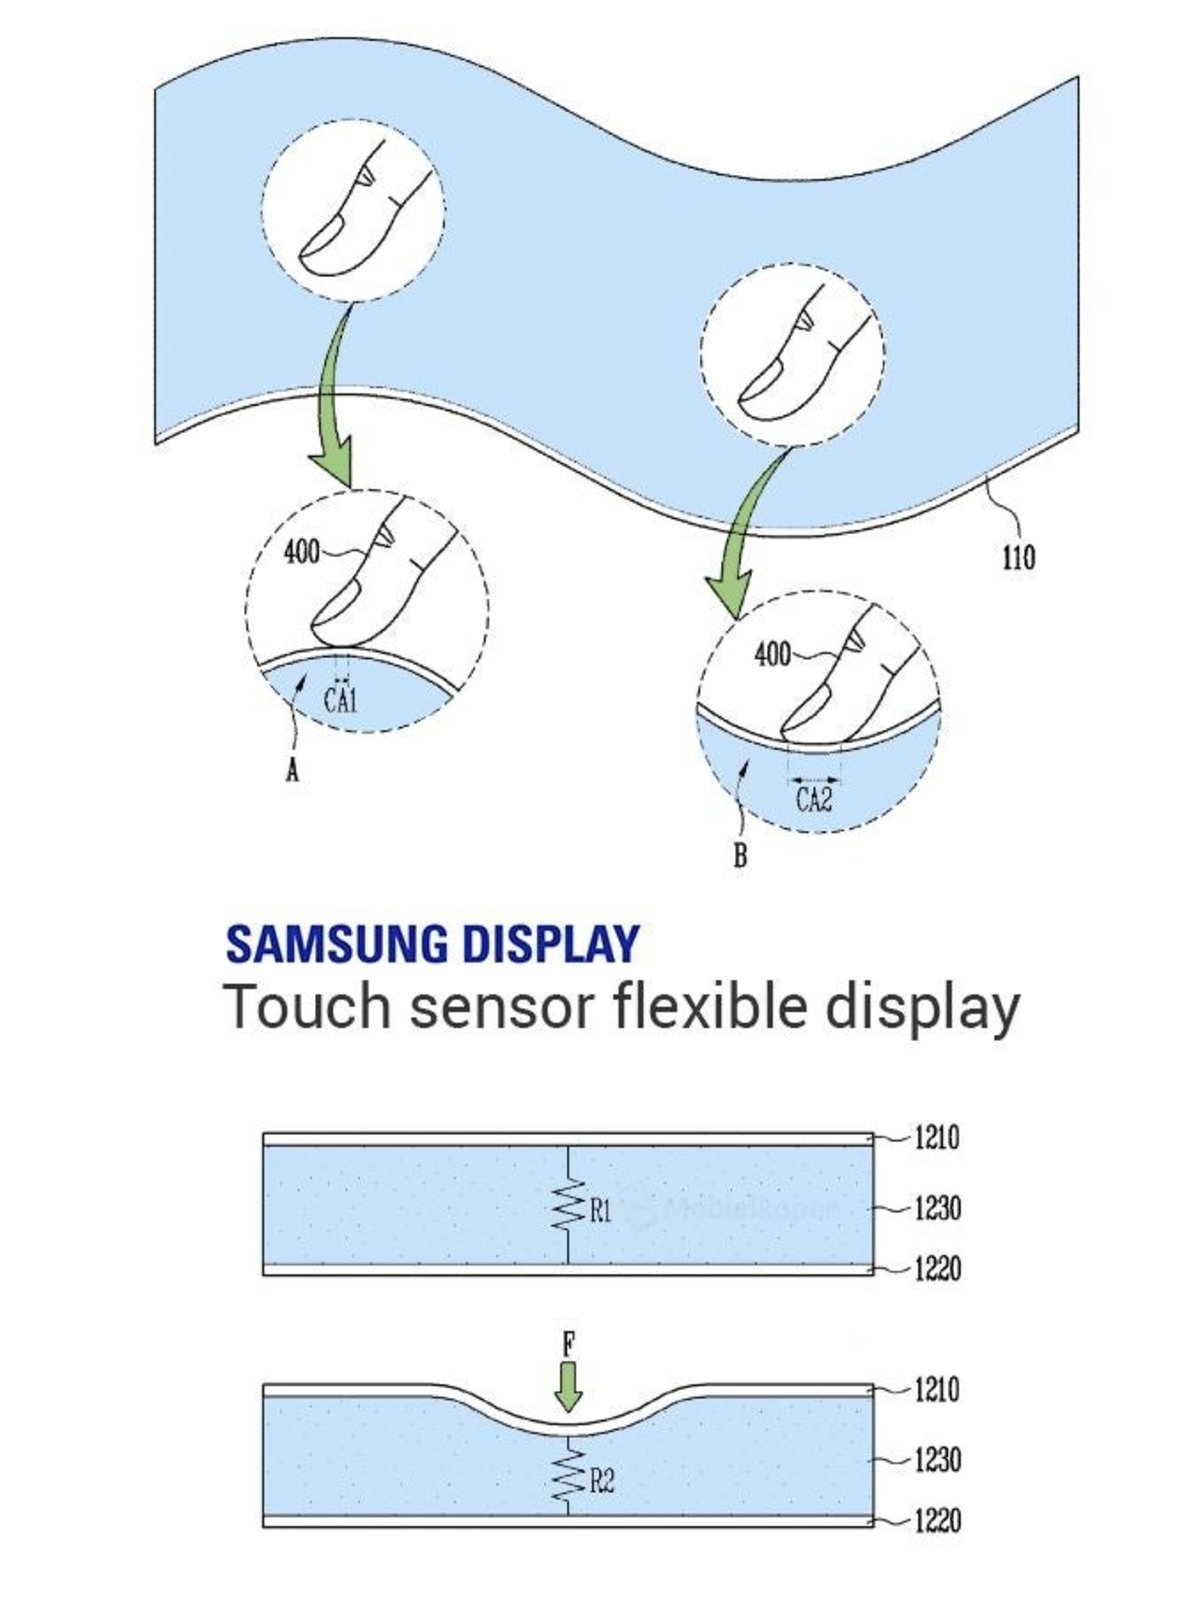 Samsung patenta pantalla flexible sensible a la presión